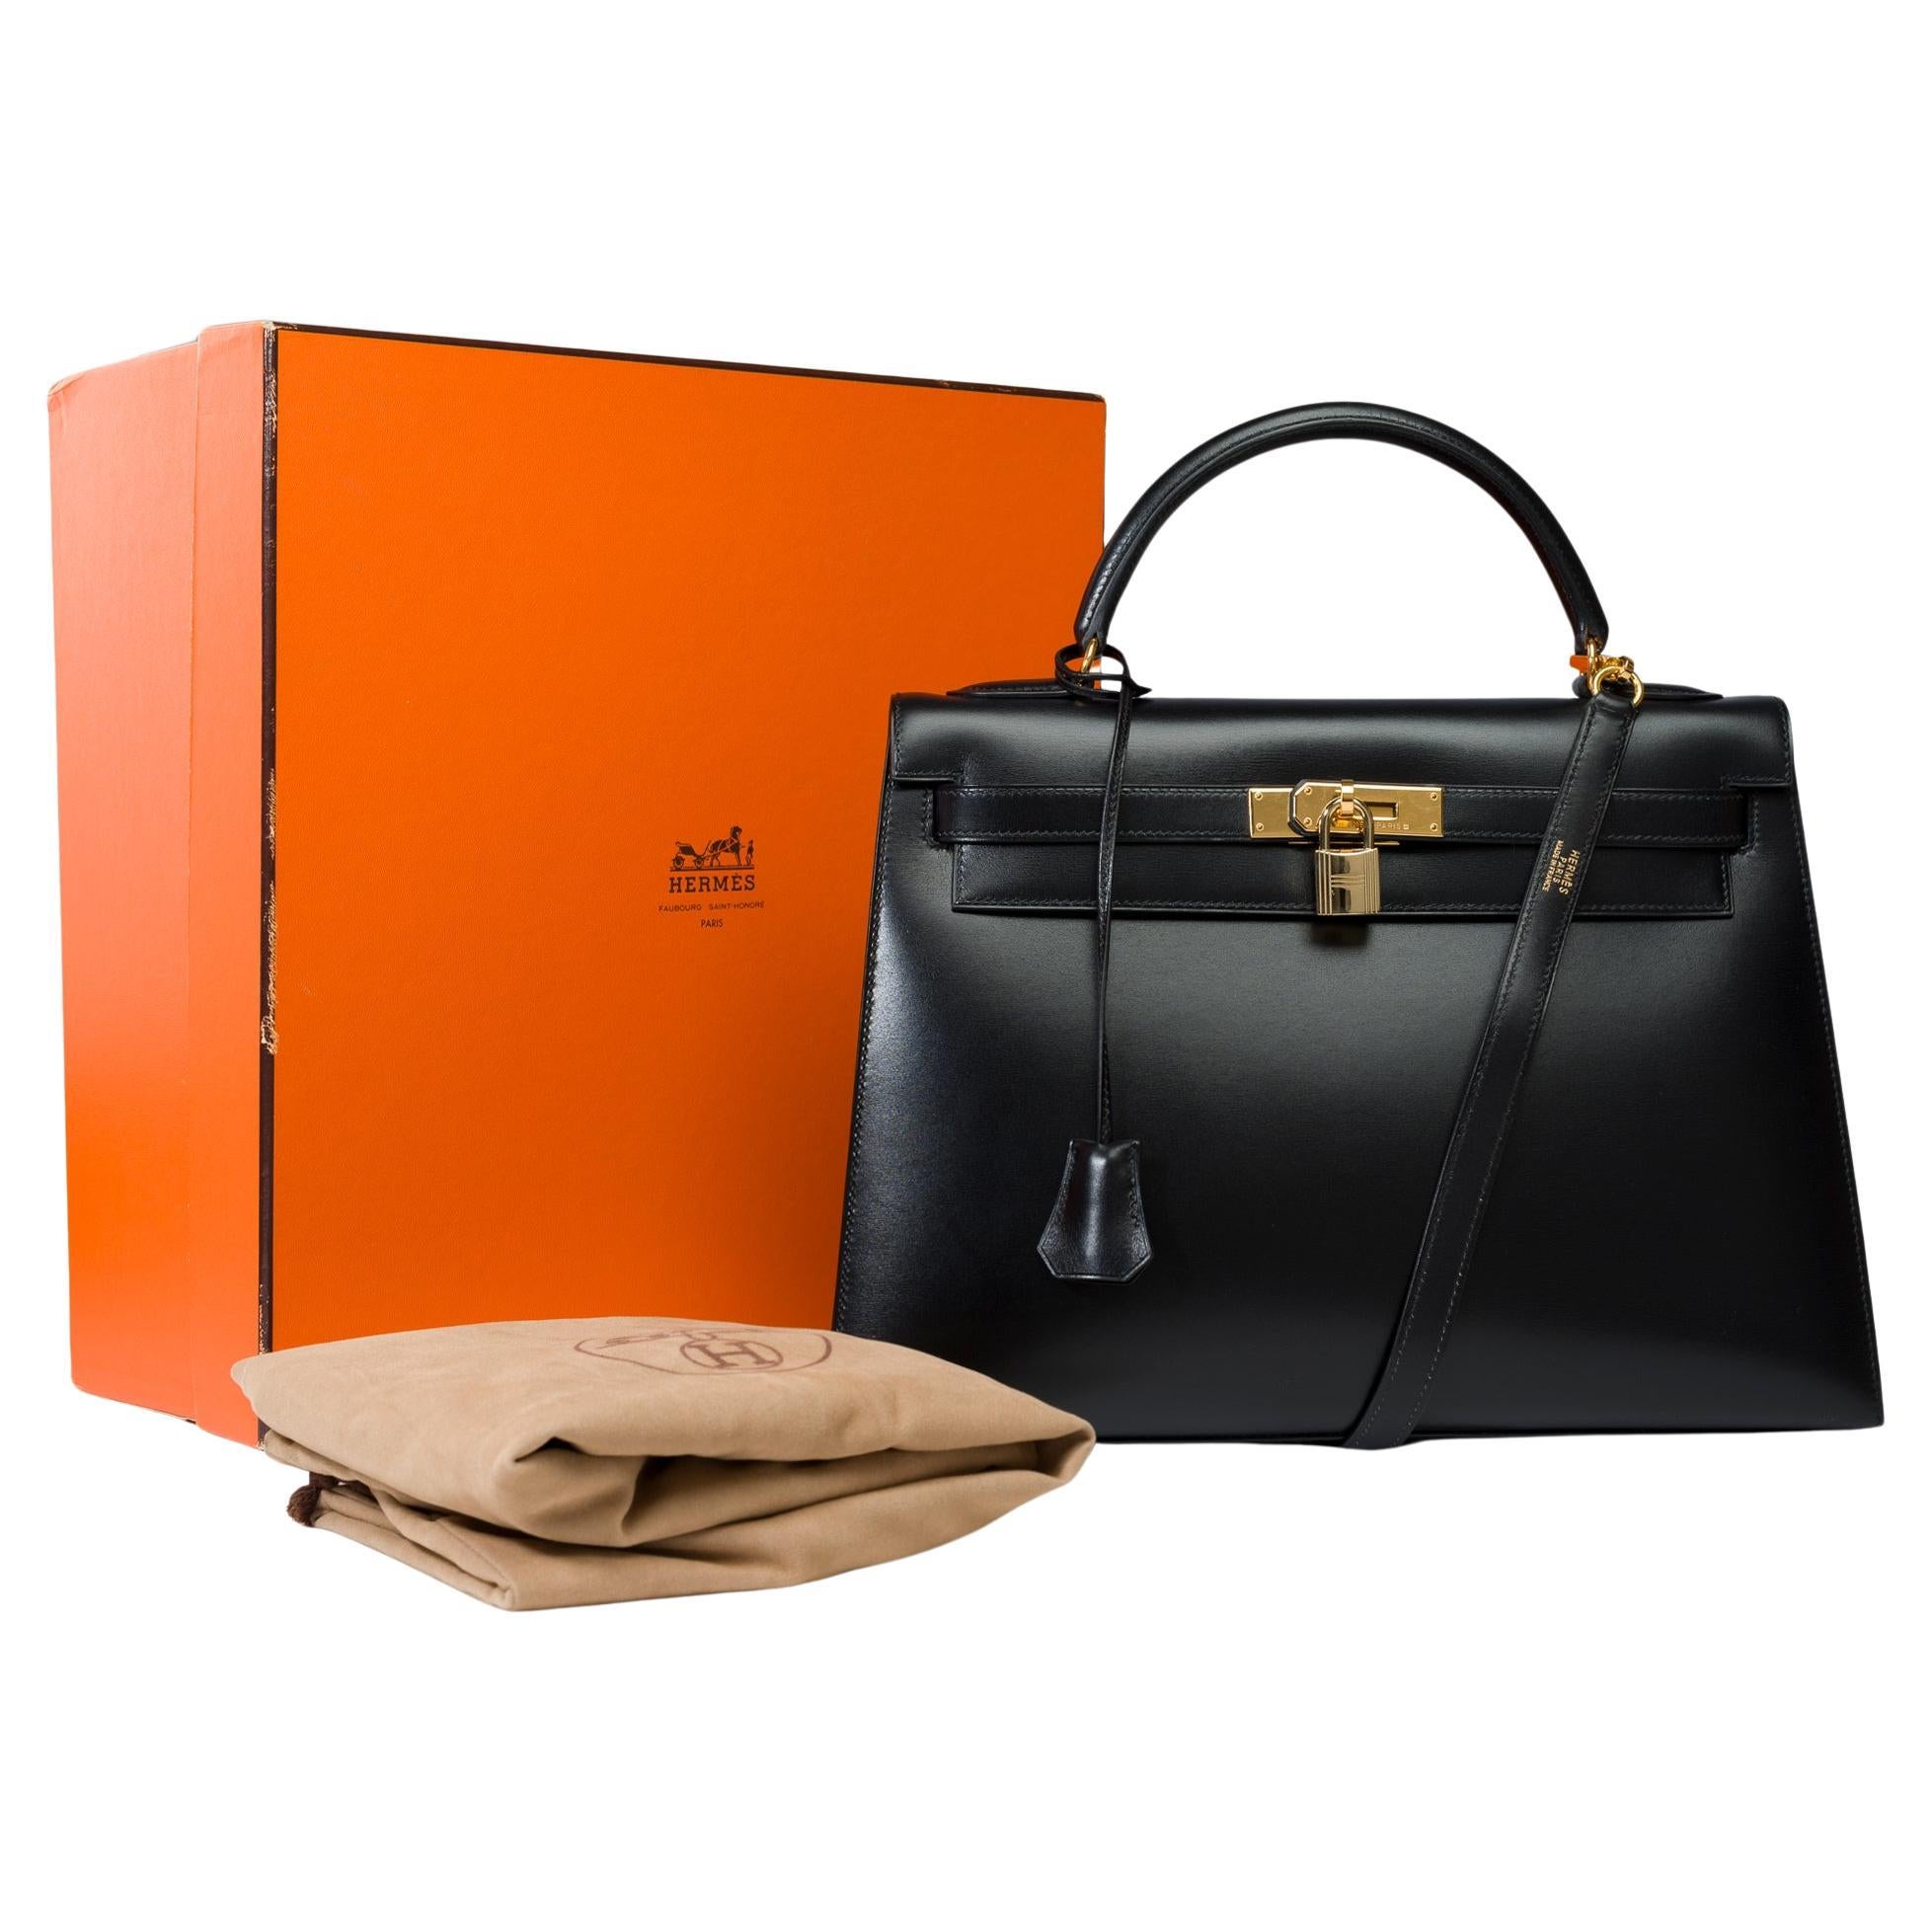 Stunning Hermès Kelly 32 sellier handbag strap in Black Box Calf leather, GHW For Sale